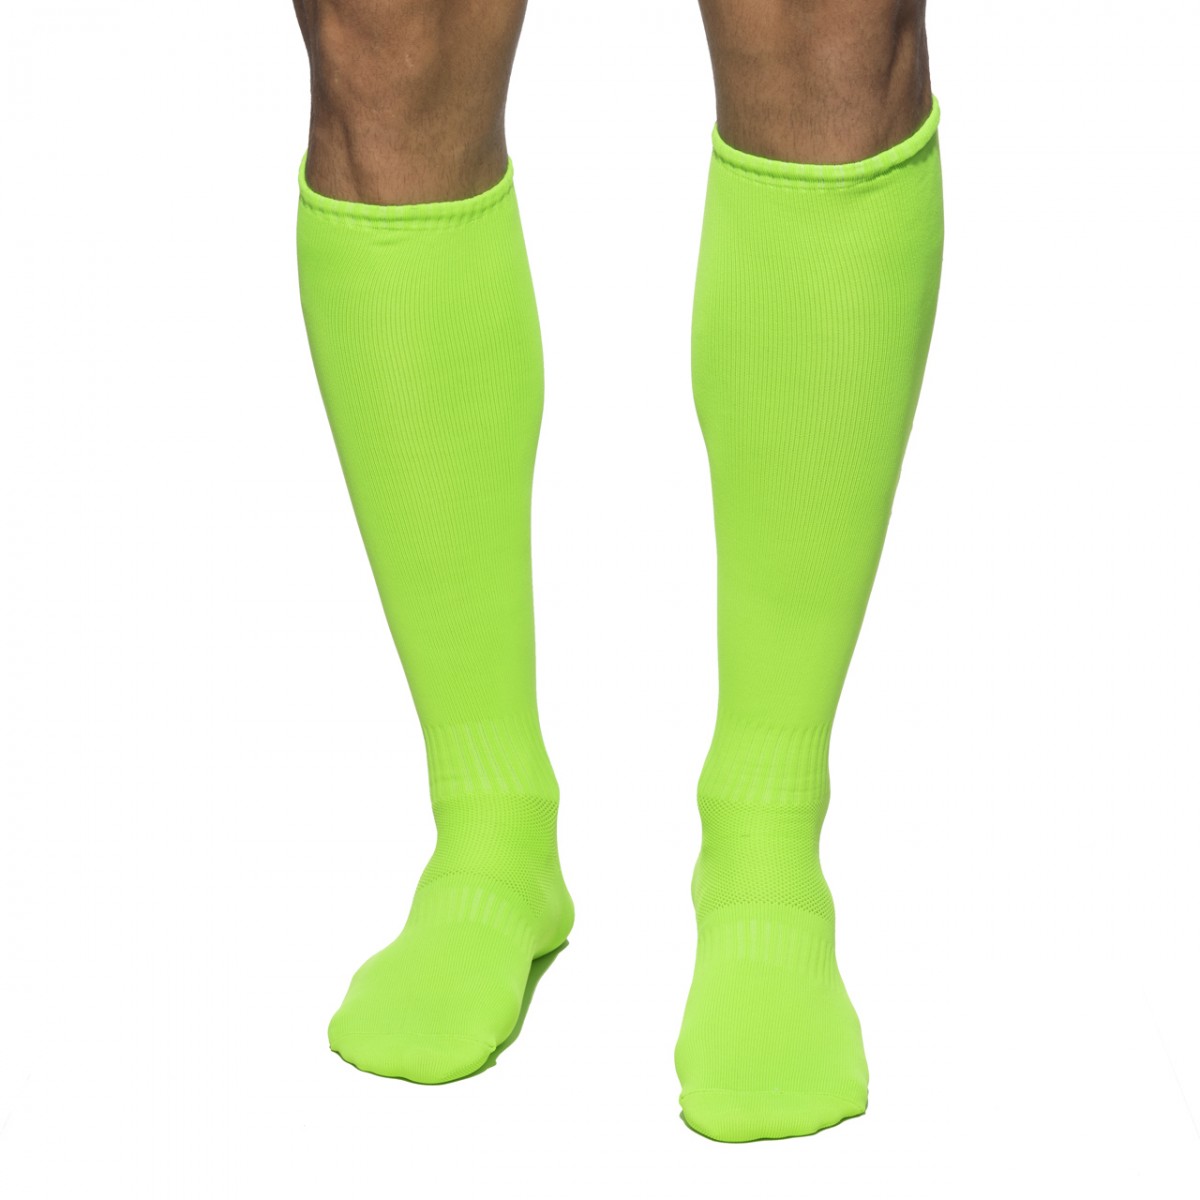 Addicted Neon Socks green